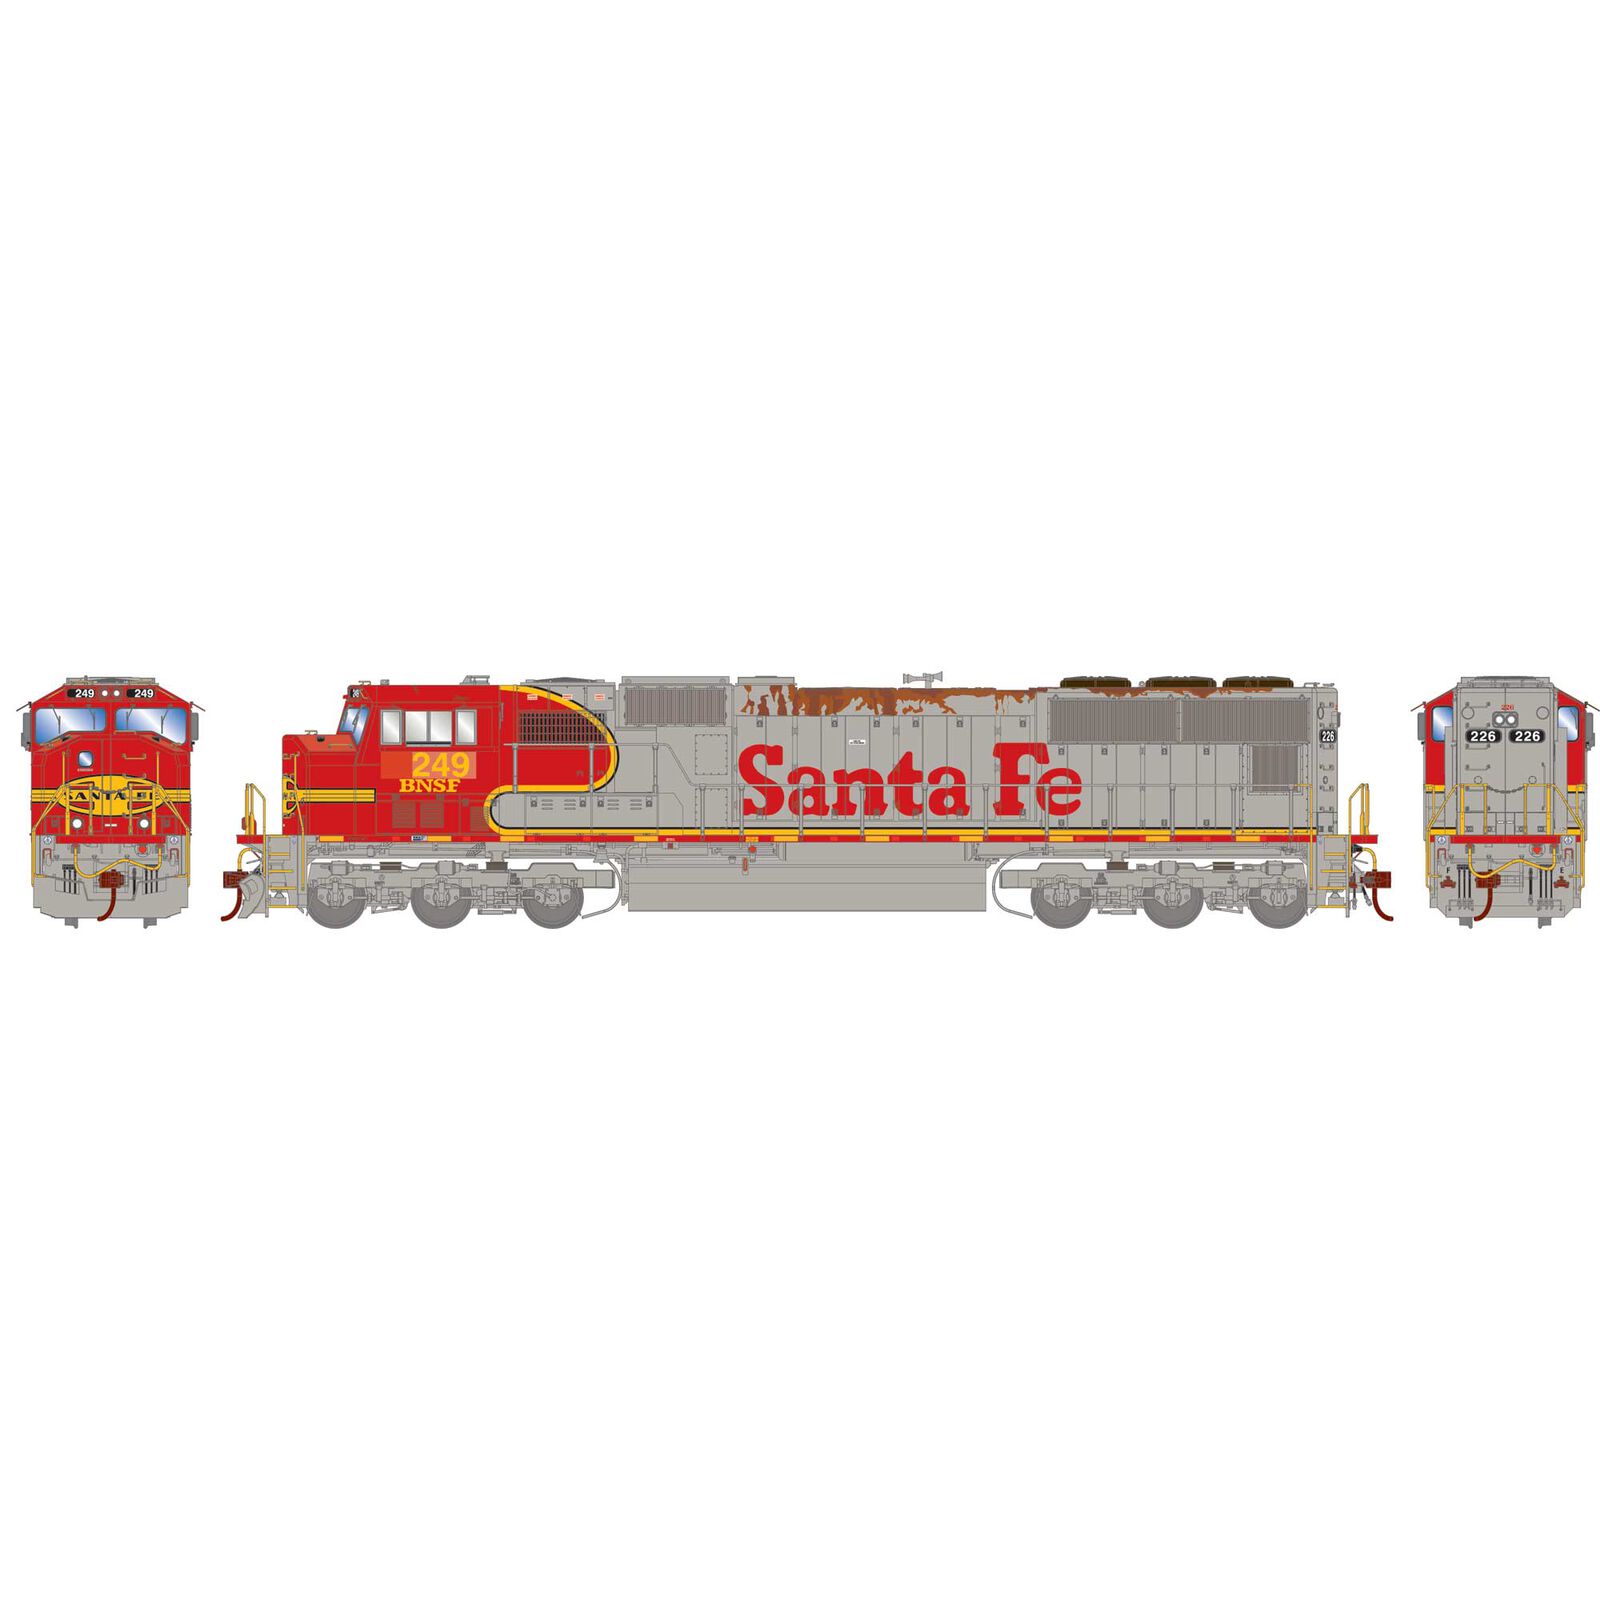 HO SD75M Locomotive with DCC & Sound, BNSF #249